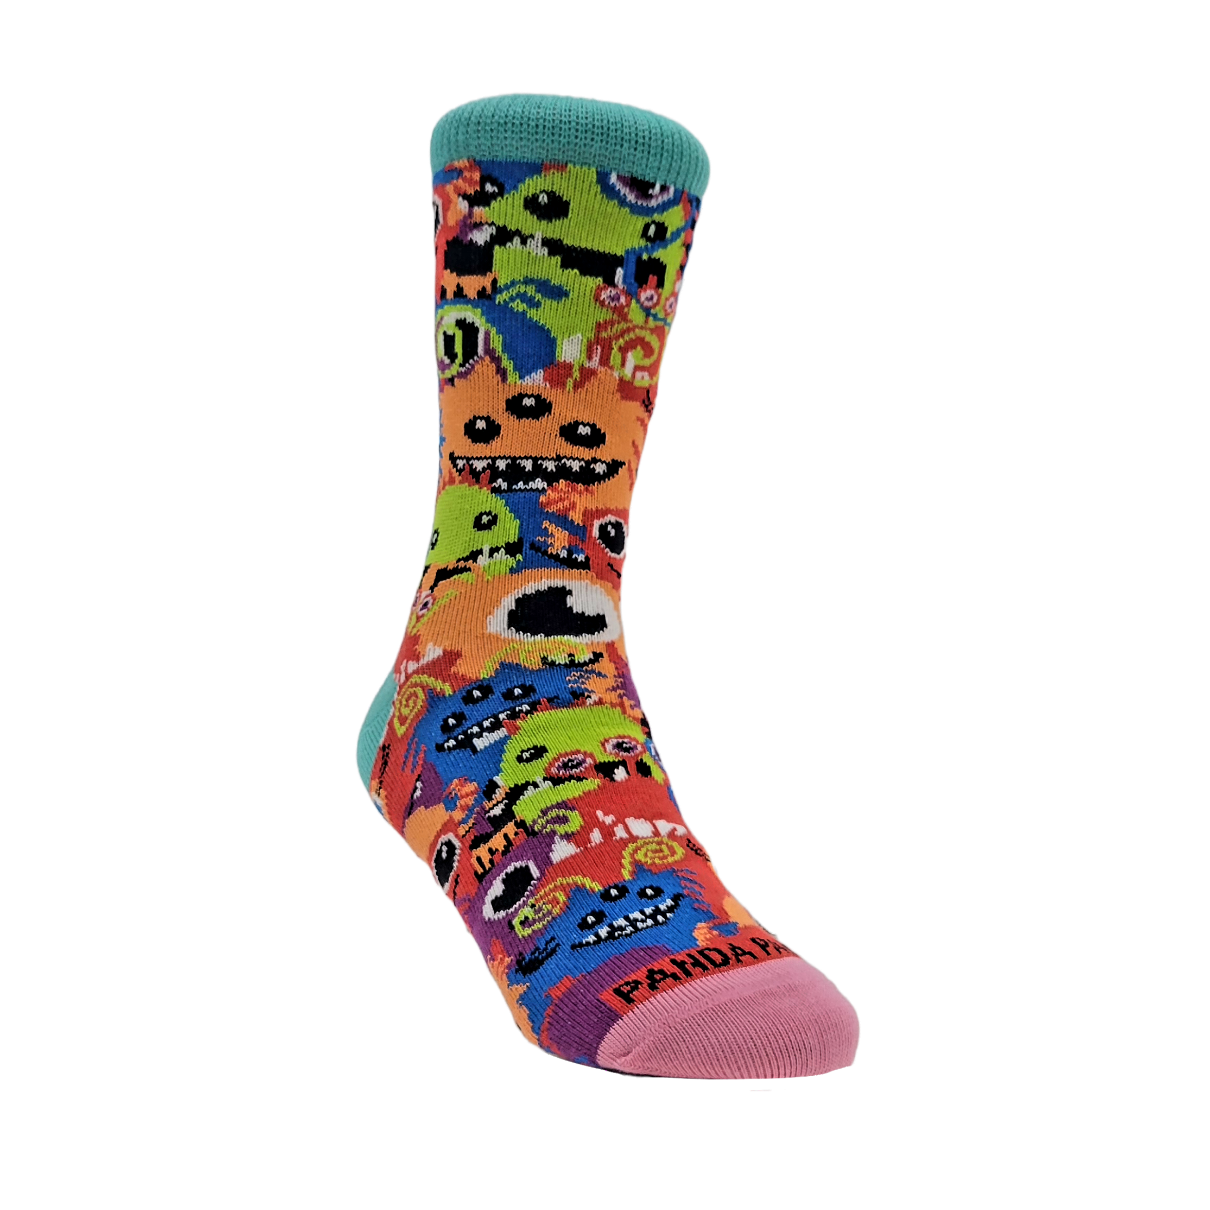 Monster Face Pattern Socks from the Sock Panda (Ages 3-7)